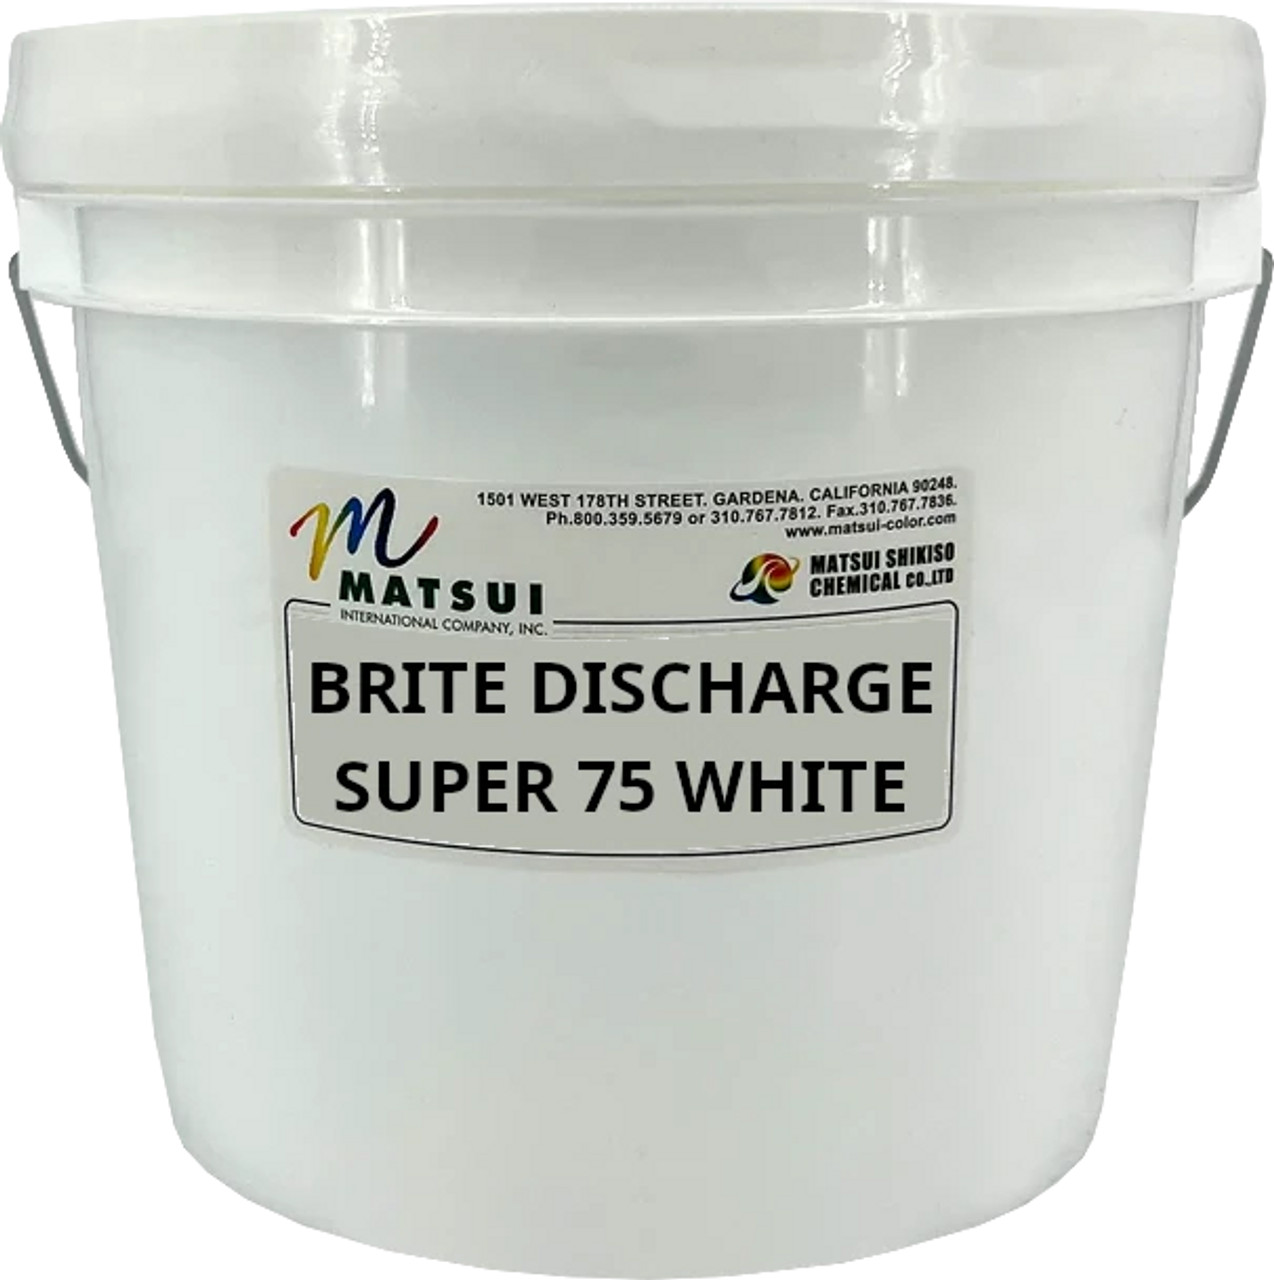 Matsui Discharge Super 75 White